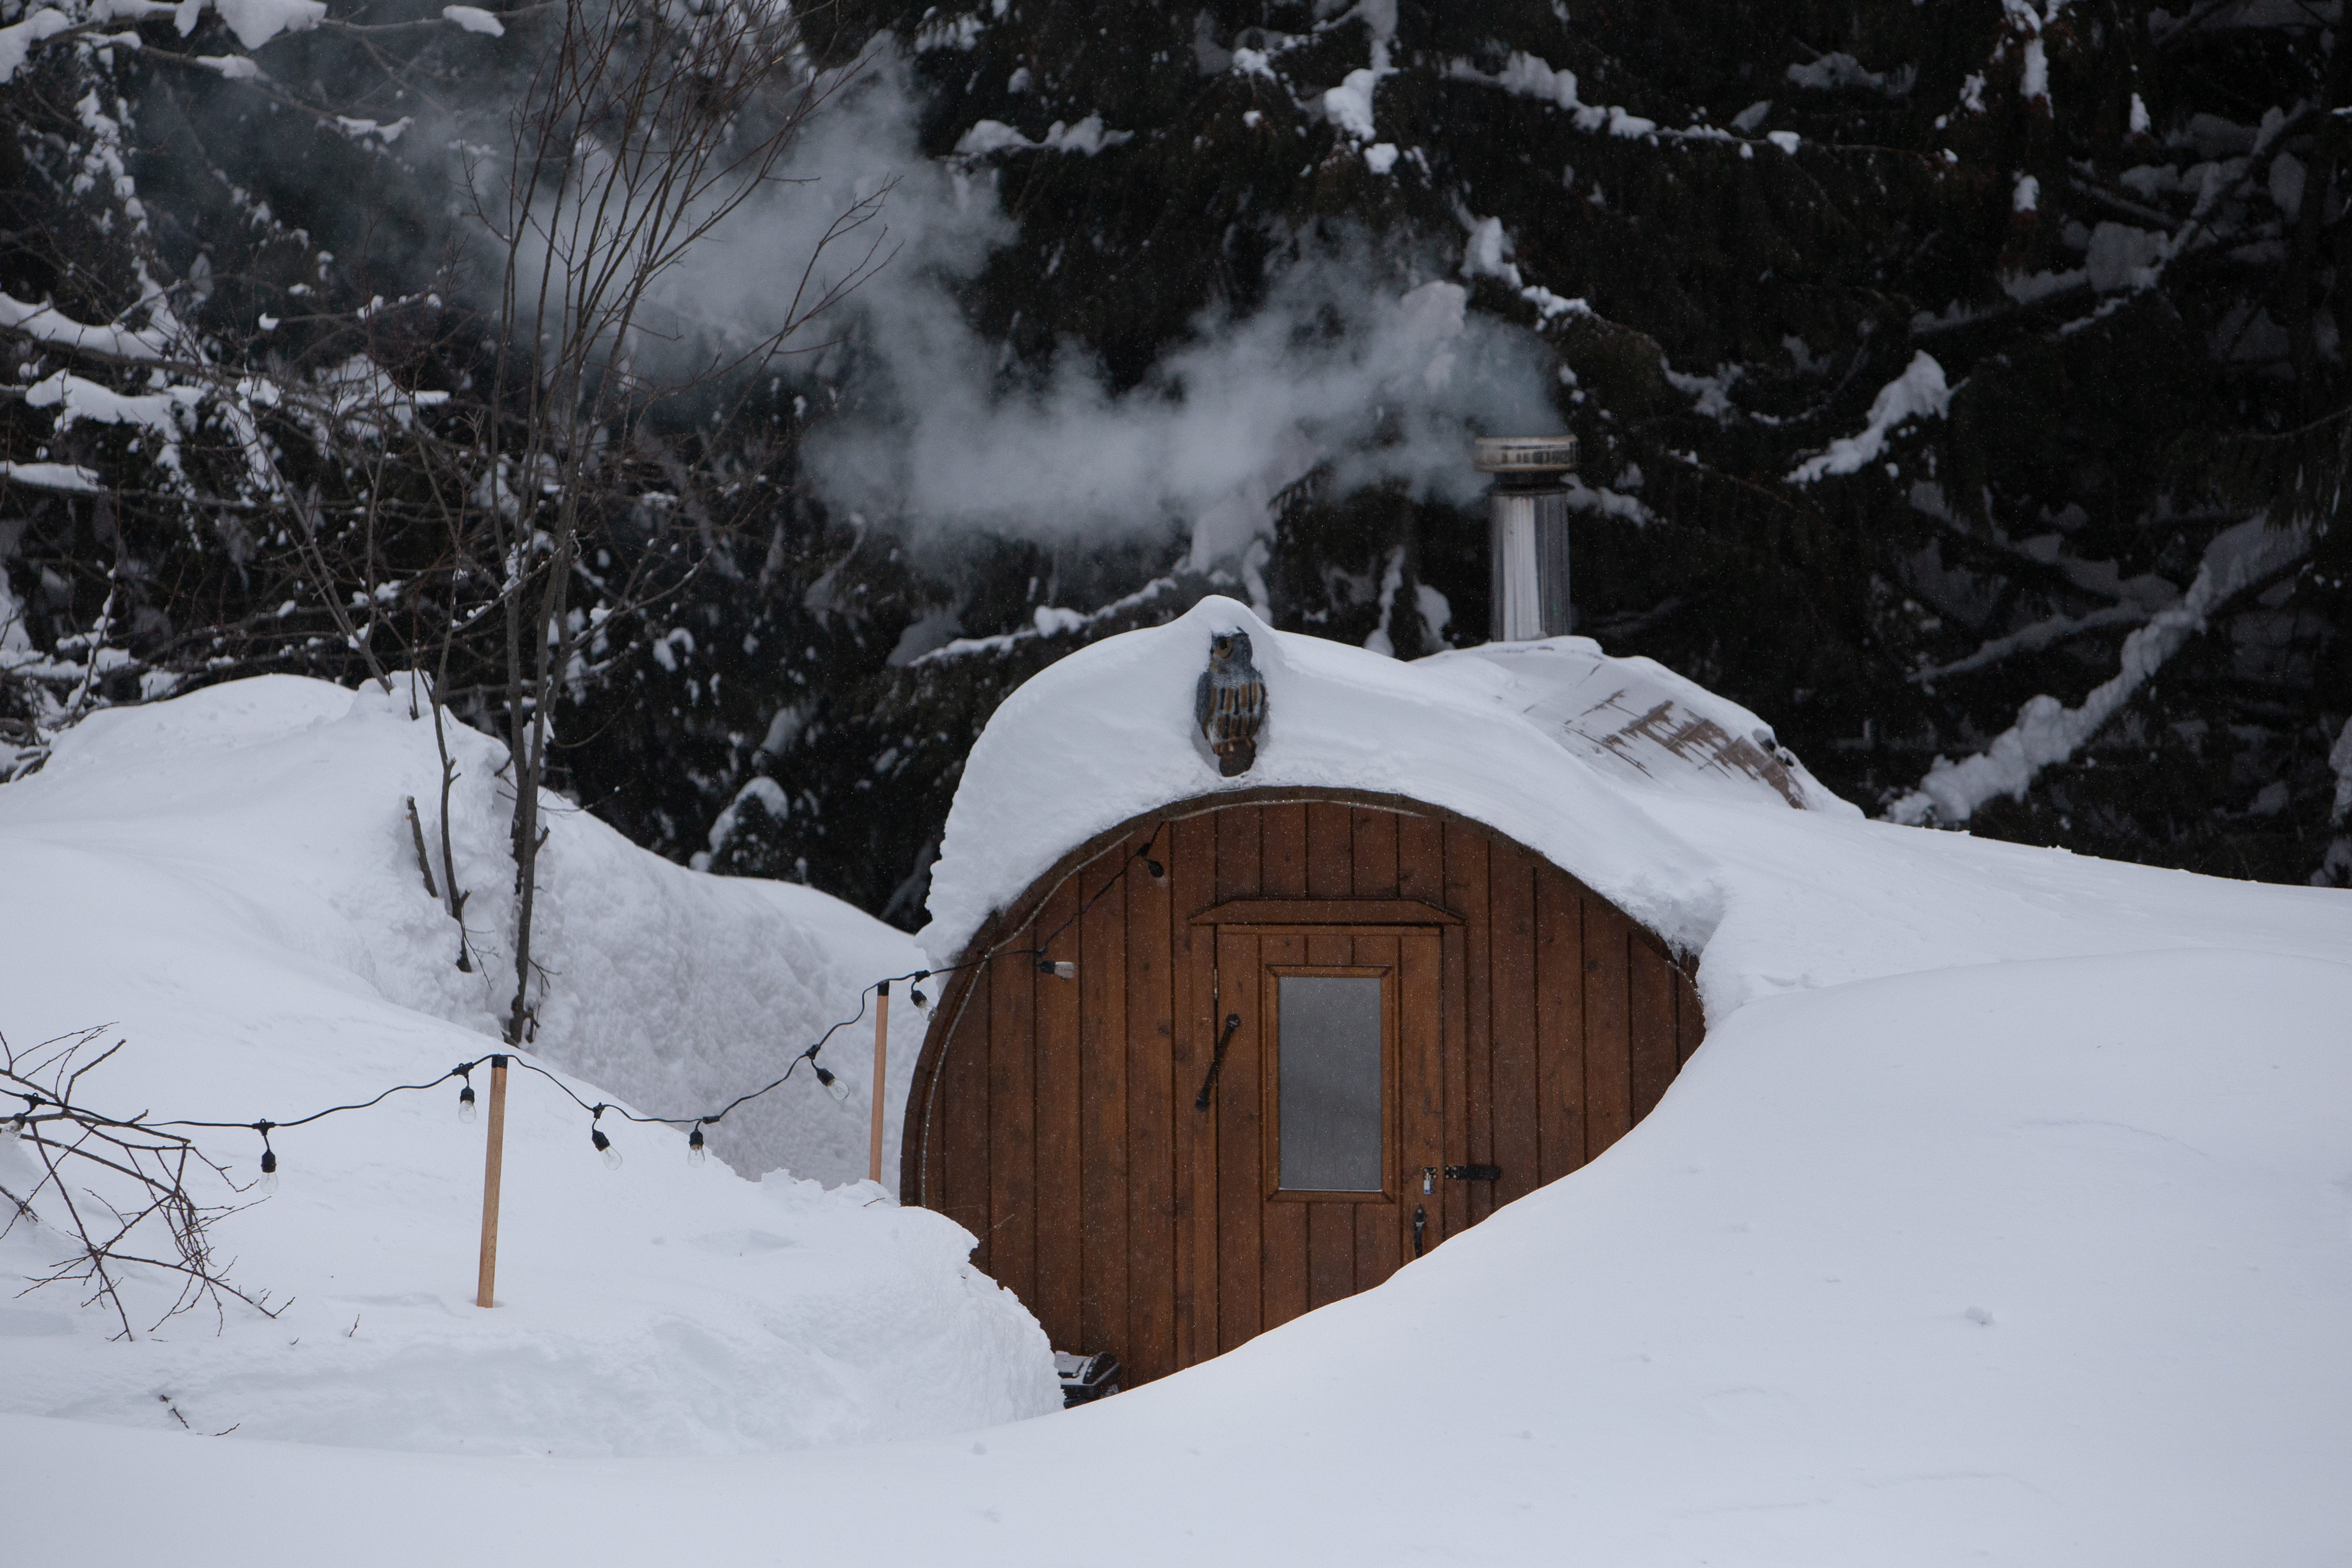 Winter setting with wood burning sauna